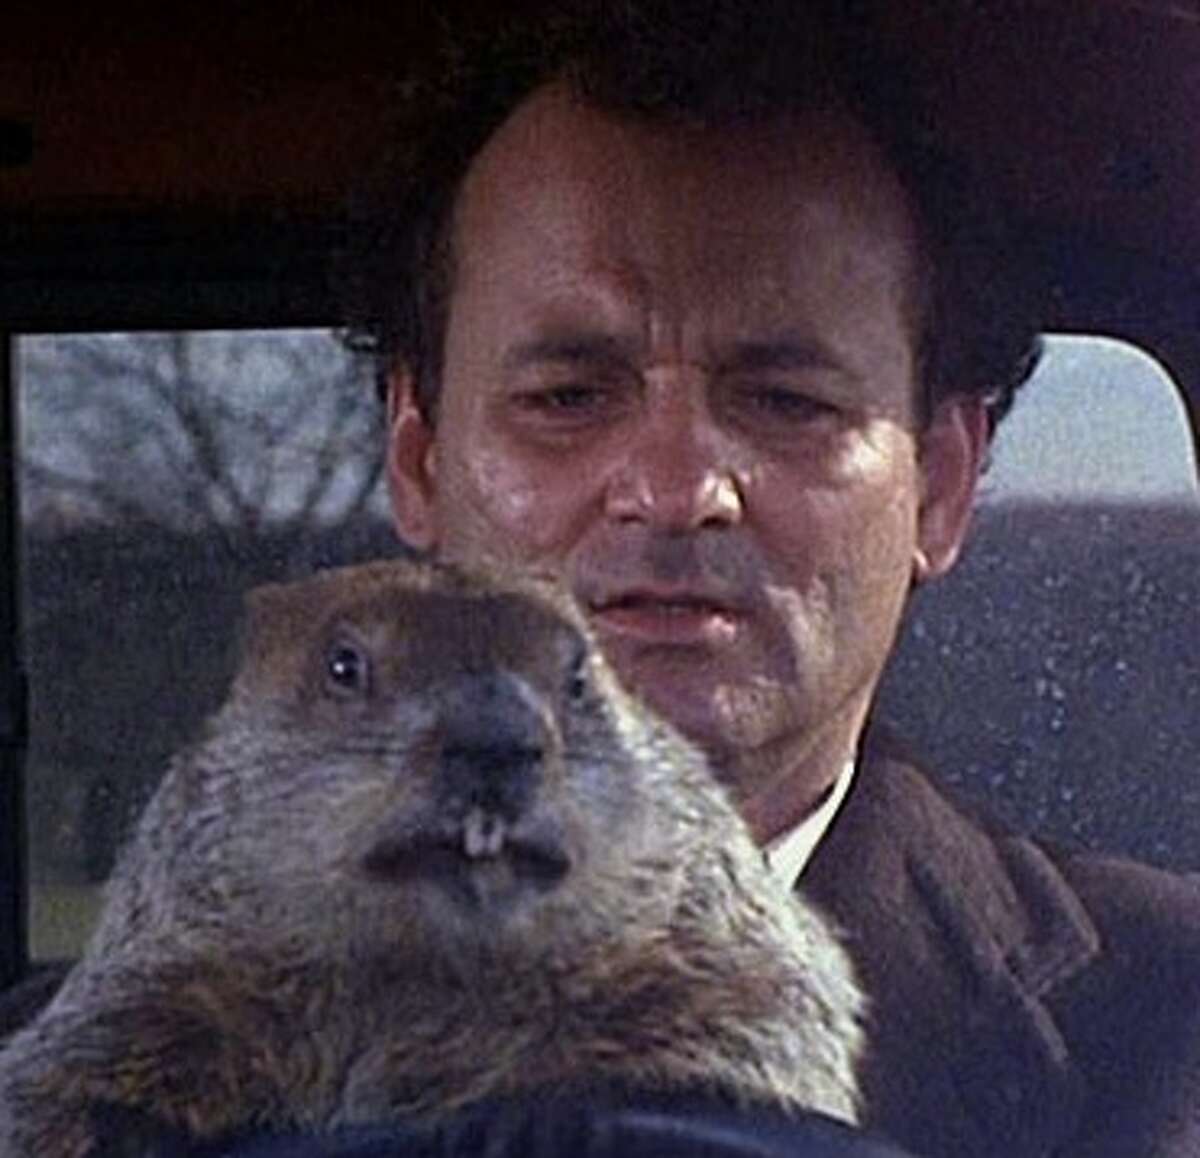 Bill Murray in "Groundhog Day"